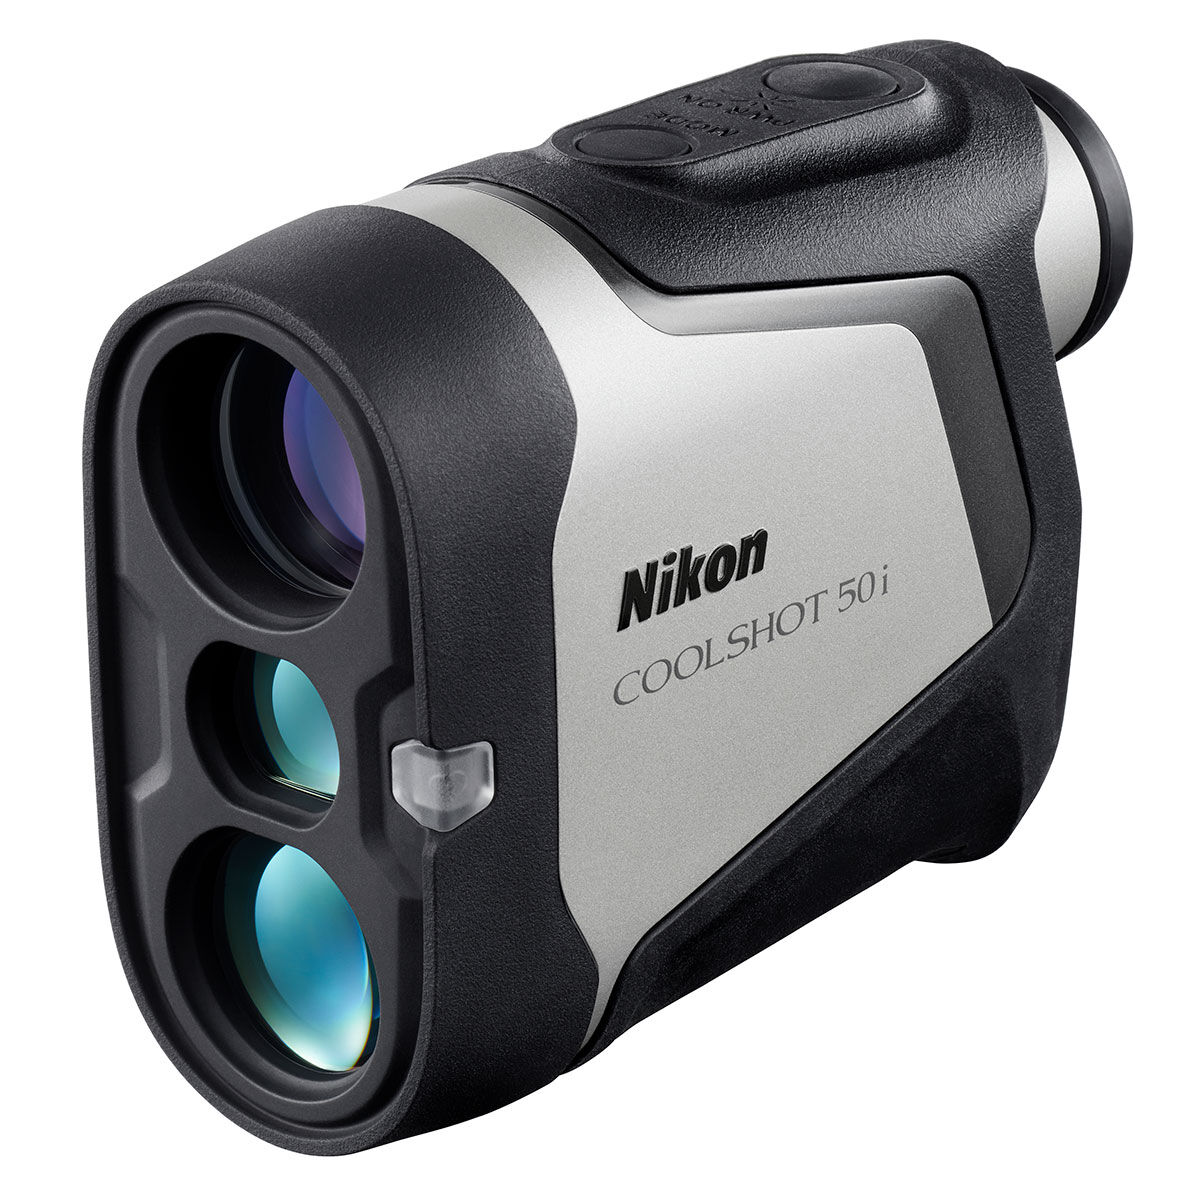 Nikon Mens Black and Silver Coolshot 50i Golf Rangefinder | American Golf, One Size - Father's Day Gift von Nikon